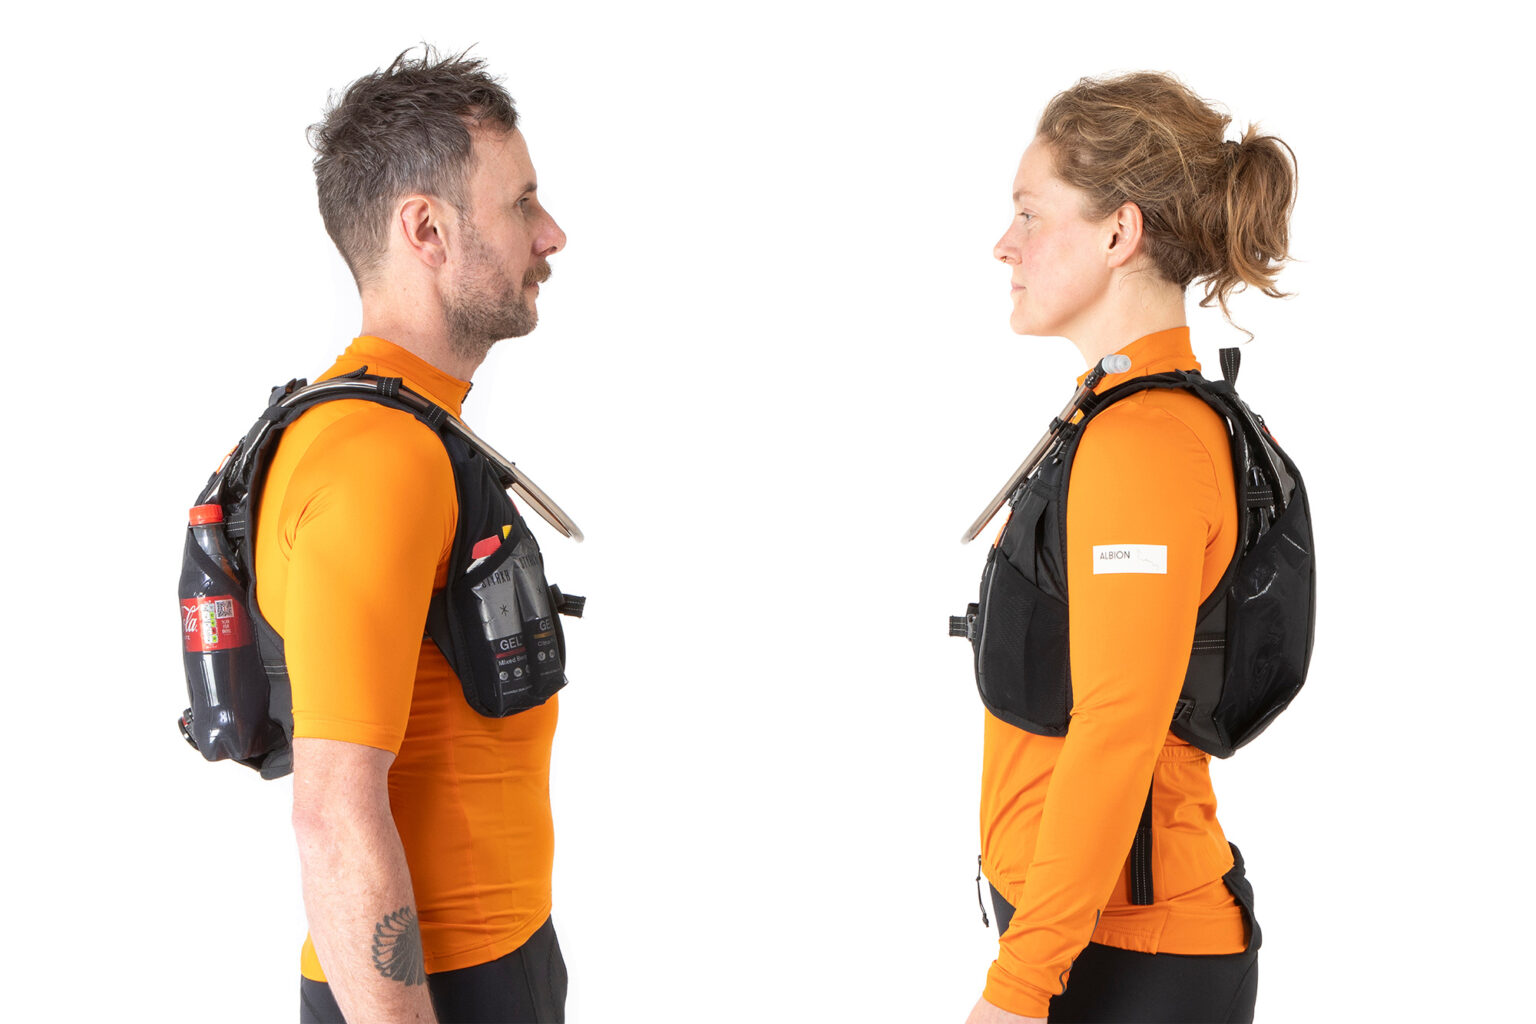 Restrap Race Hydration Vest lightweight bikepacking backpack, unisex fit